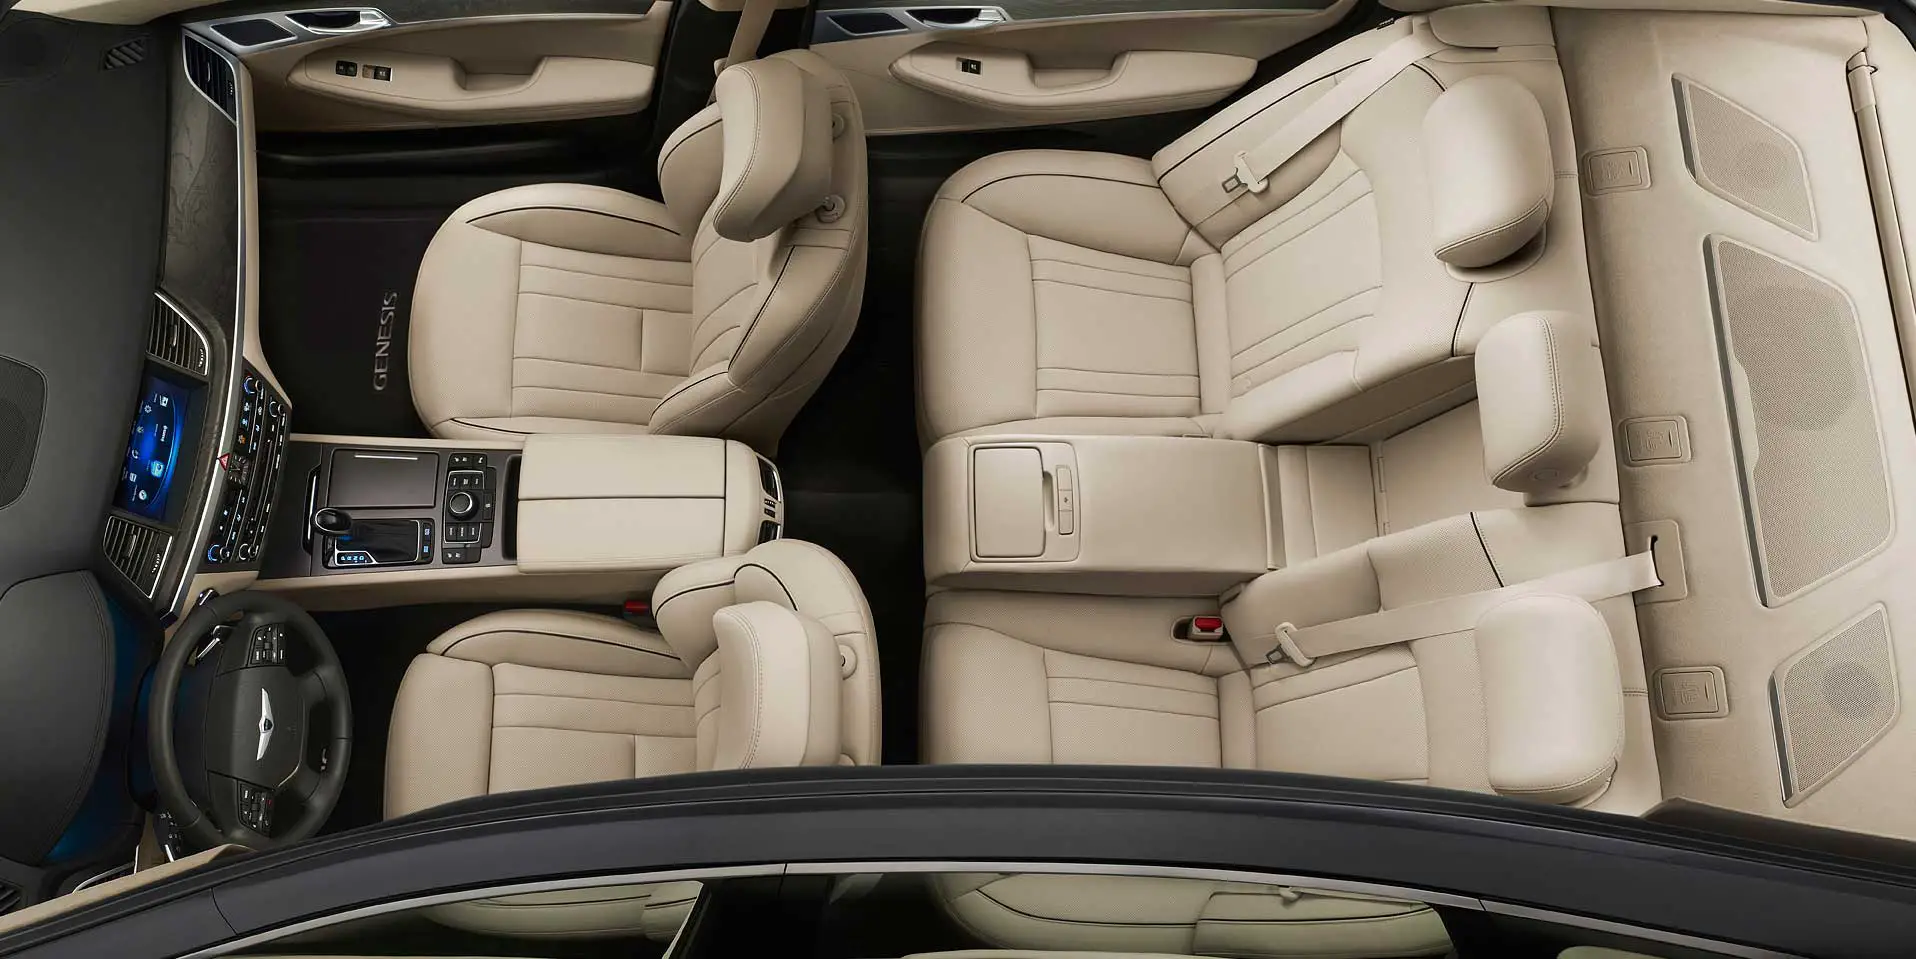 Hyundai Genesis 5.0 Interior Seats Top View